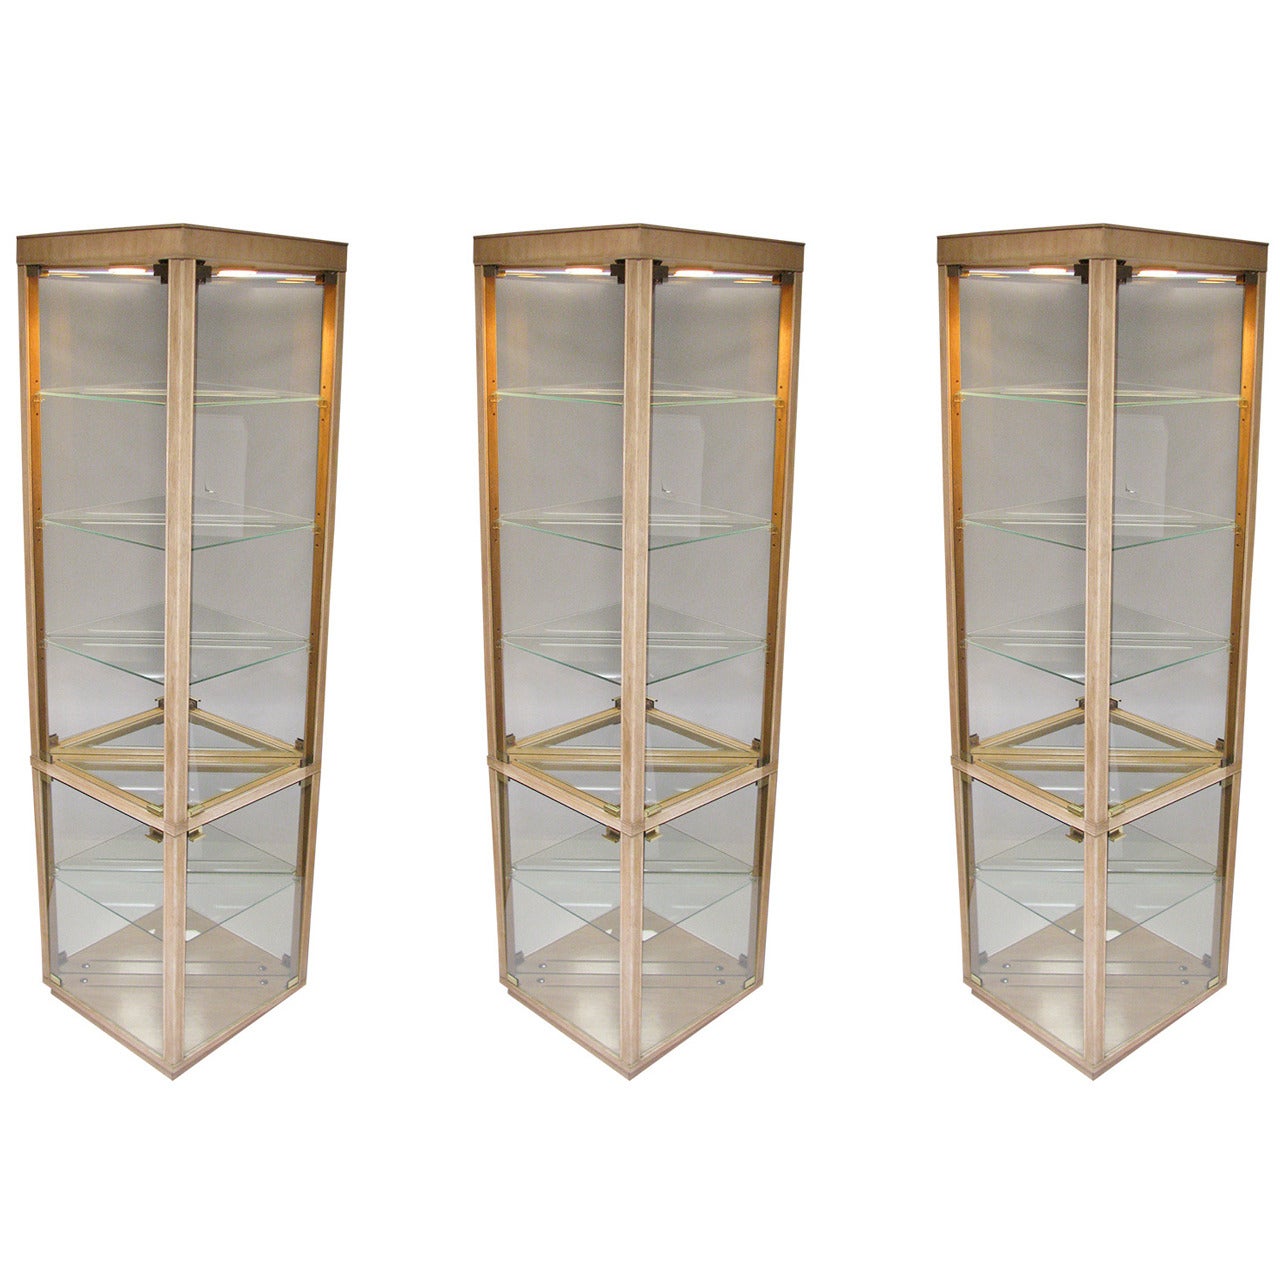 Three Bronze-Tint Glass Illuminated Vitrines by Drexel